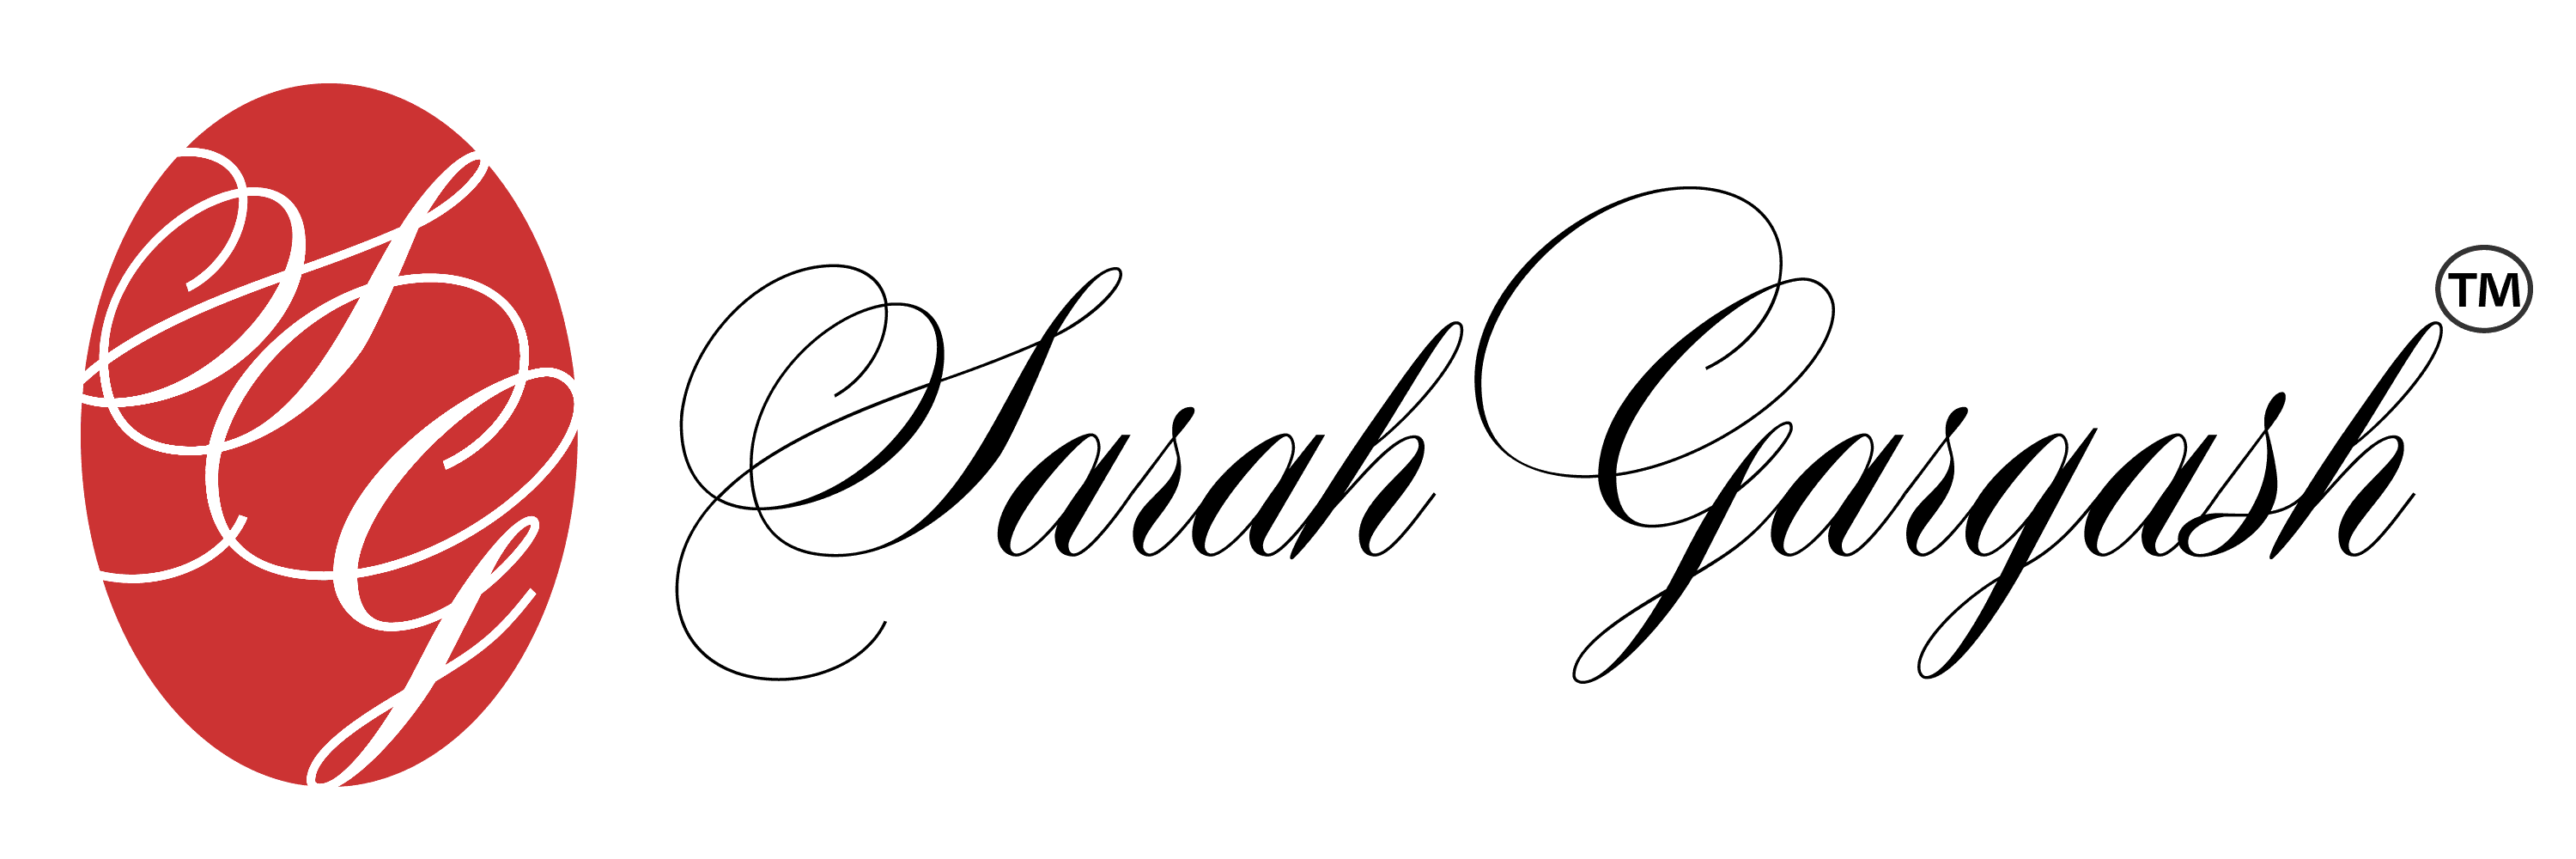 SarahGargash